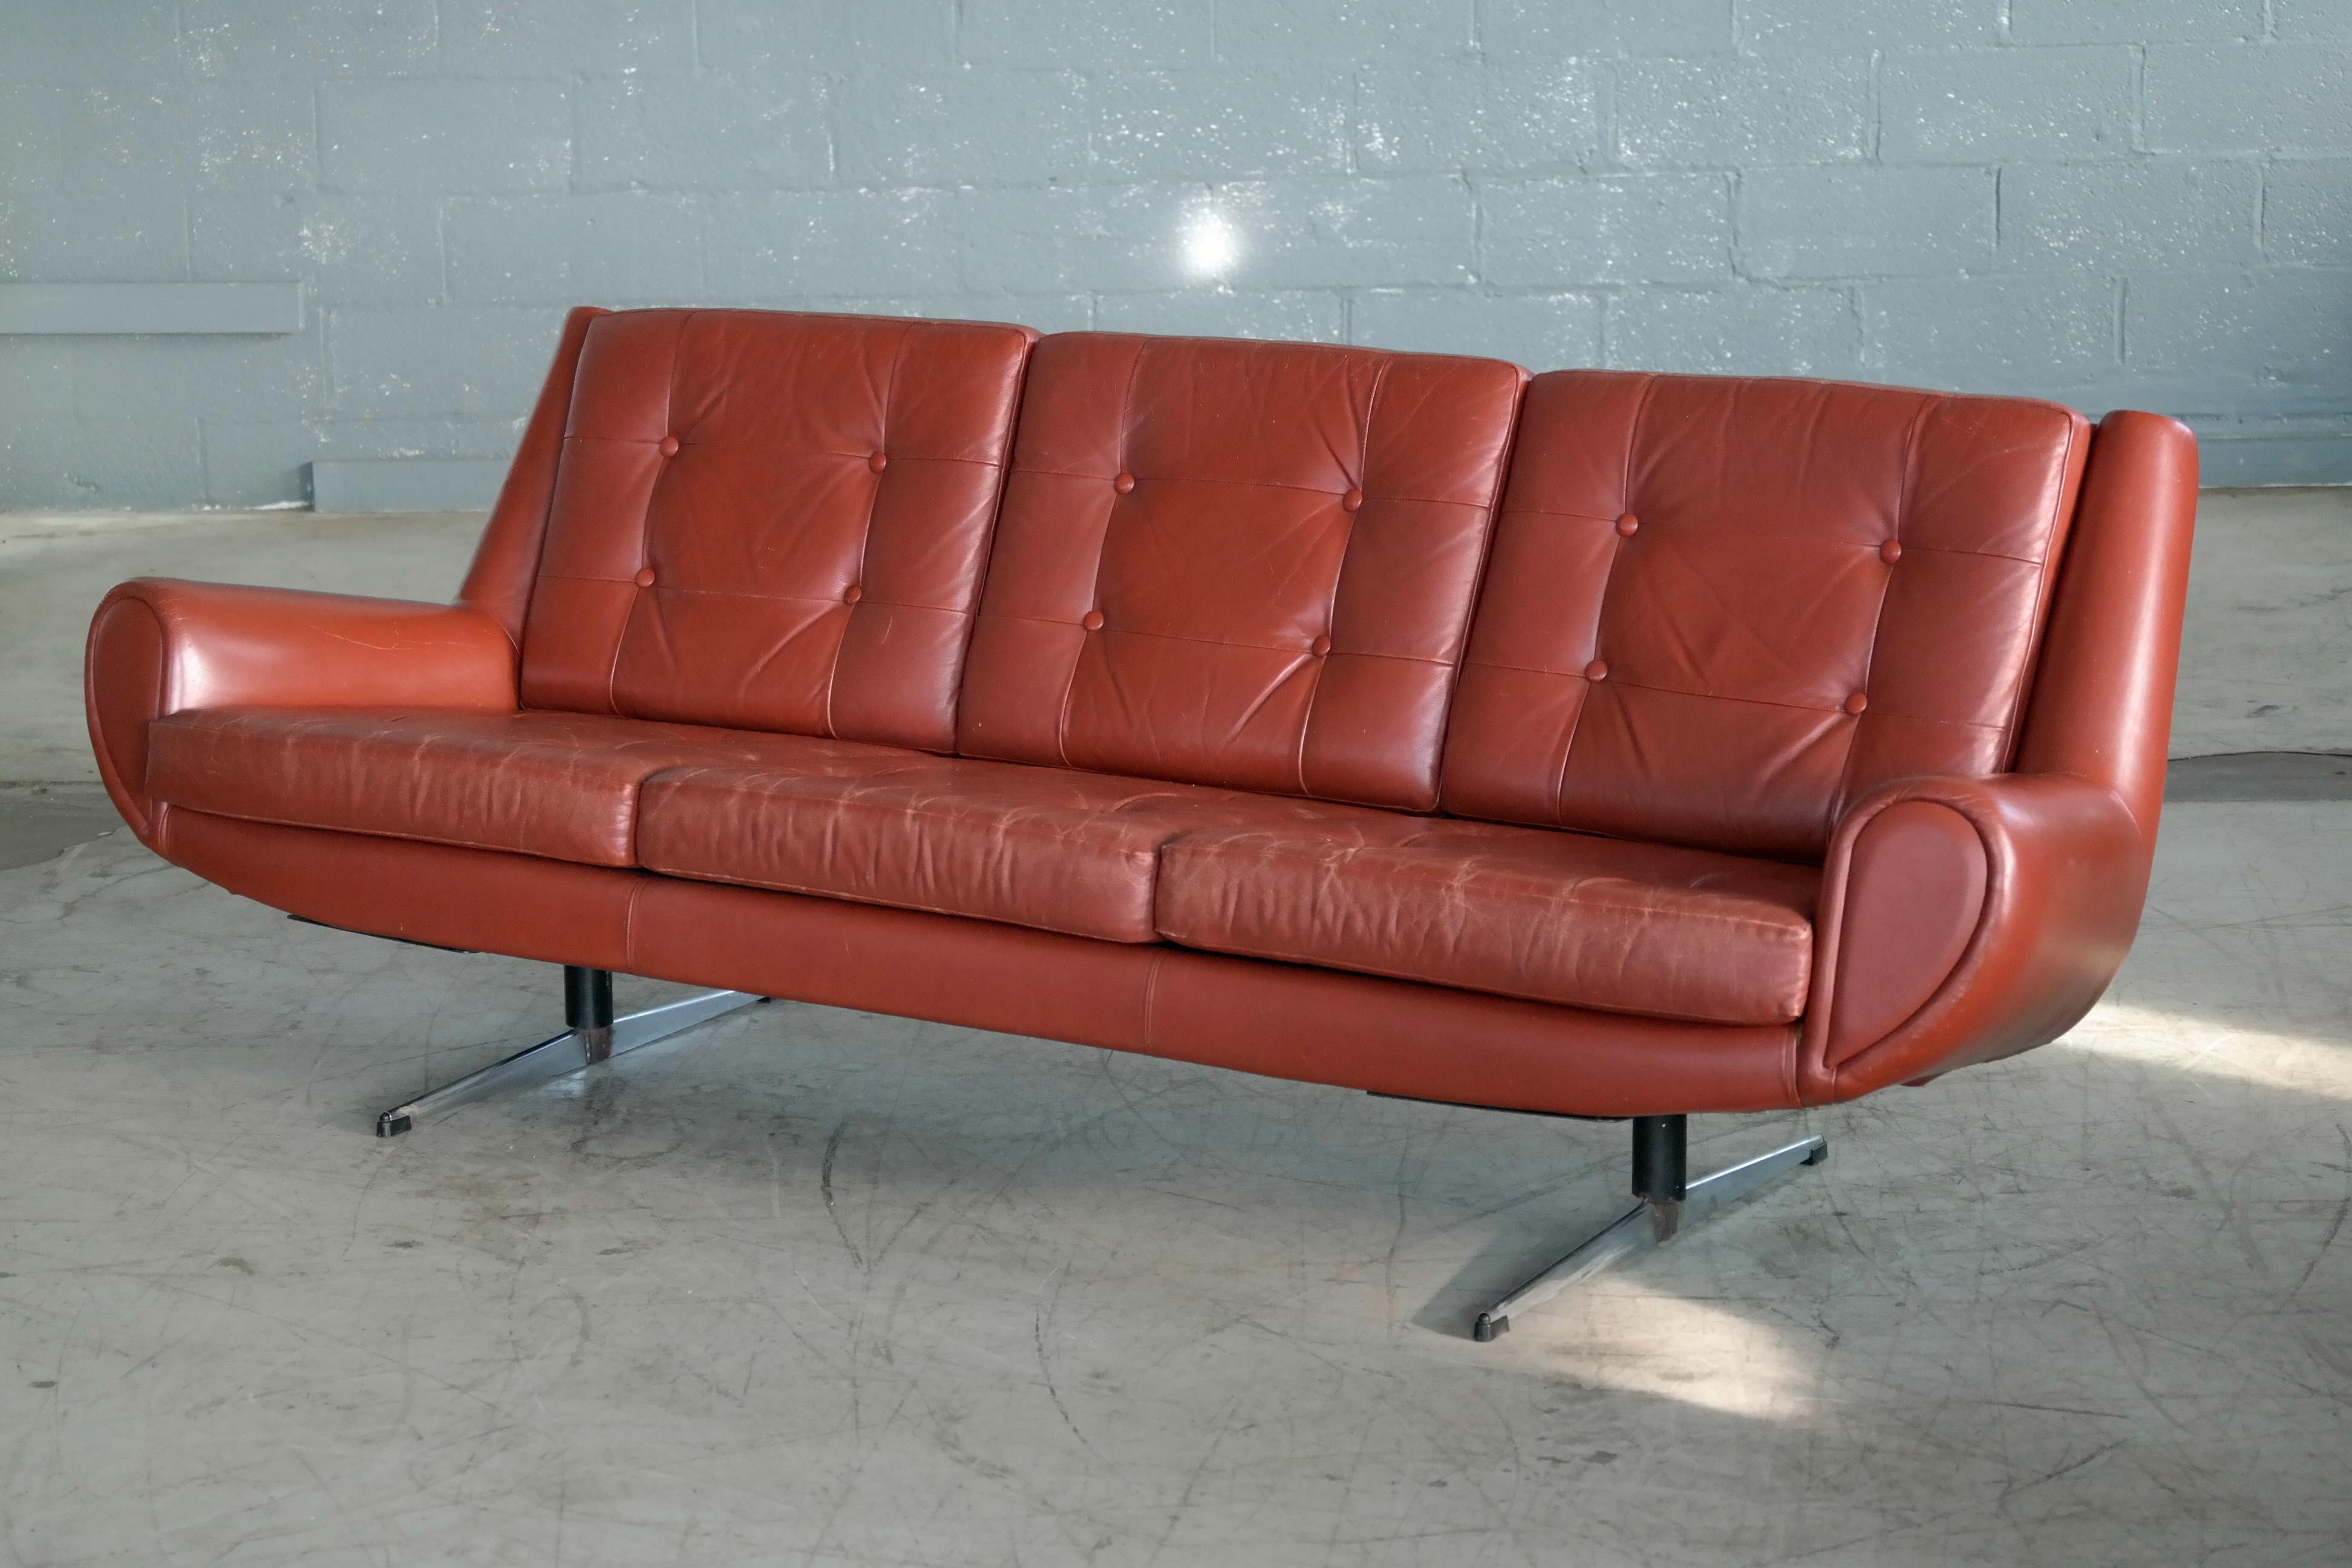 Mid-Century Modern Danish Midcentury Airport Style Leather Sofa with Metal Legs by Skjold Sorensen